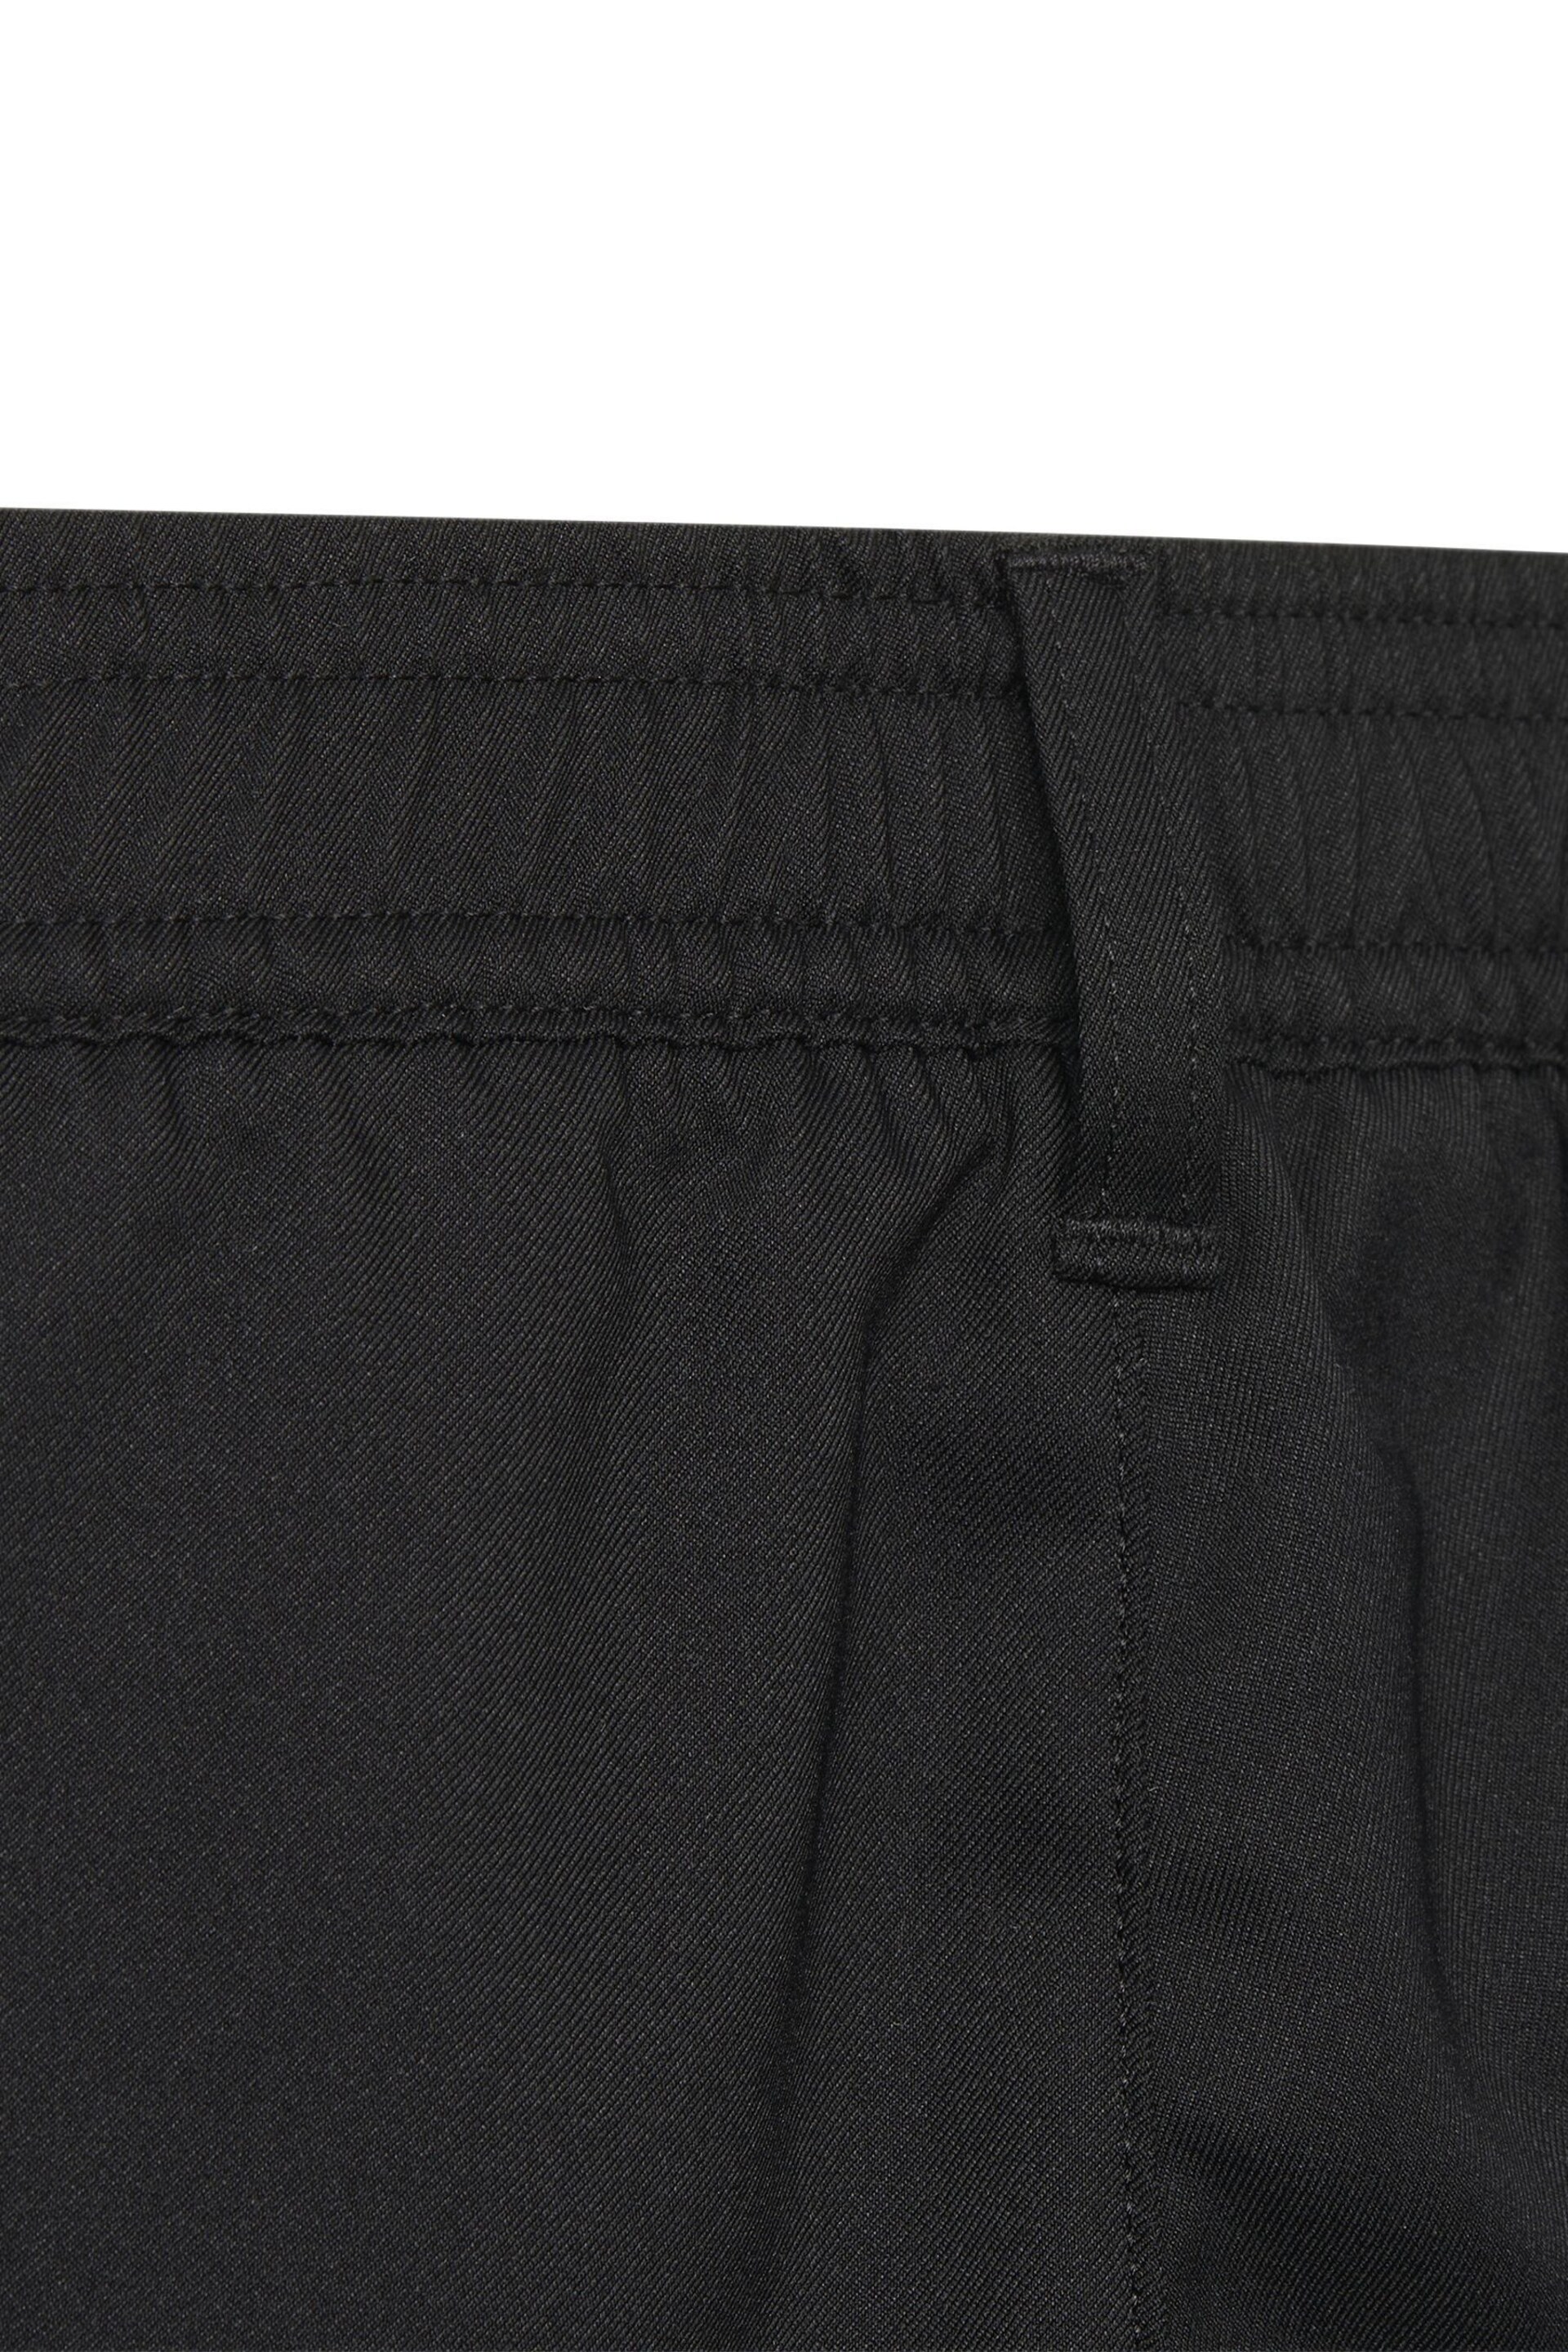 adidas Golf Ultimate365 Adjustable Black Trousers - Image 4 of 5